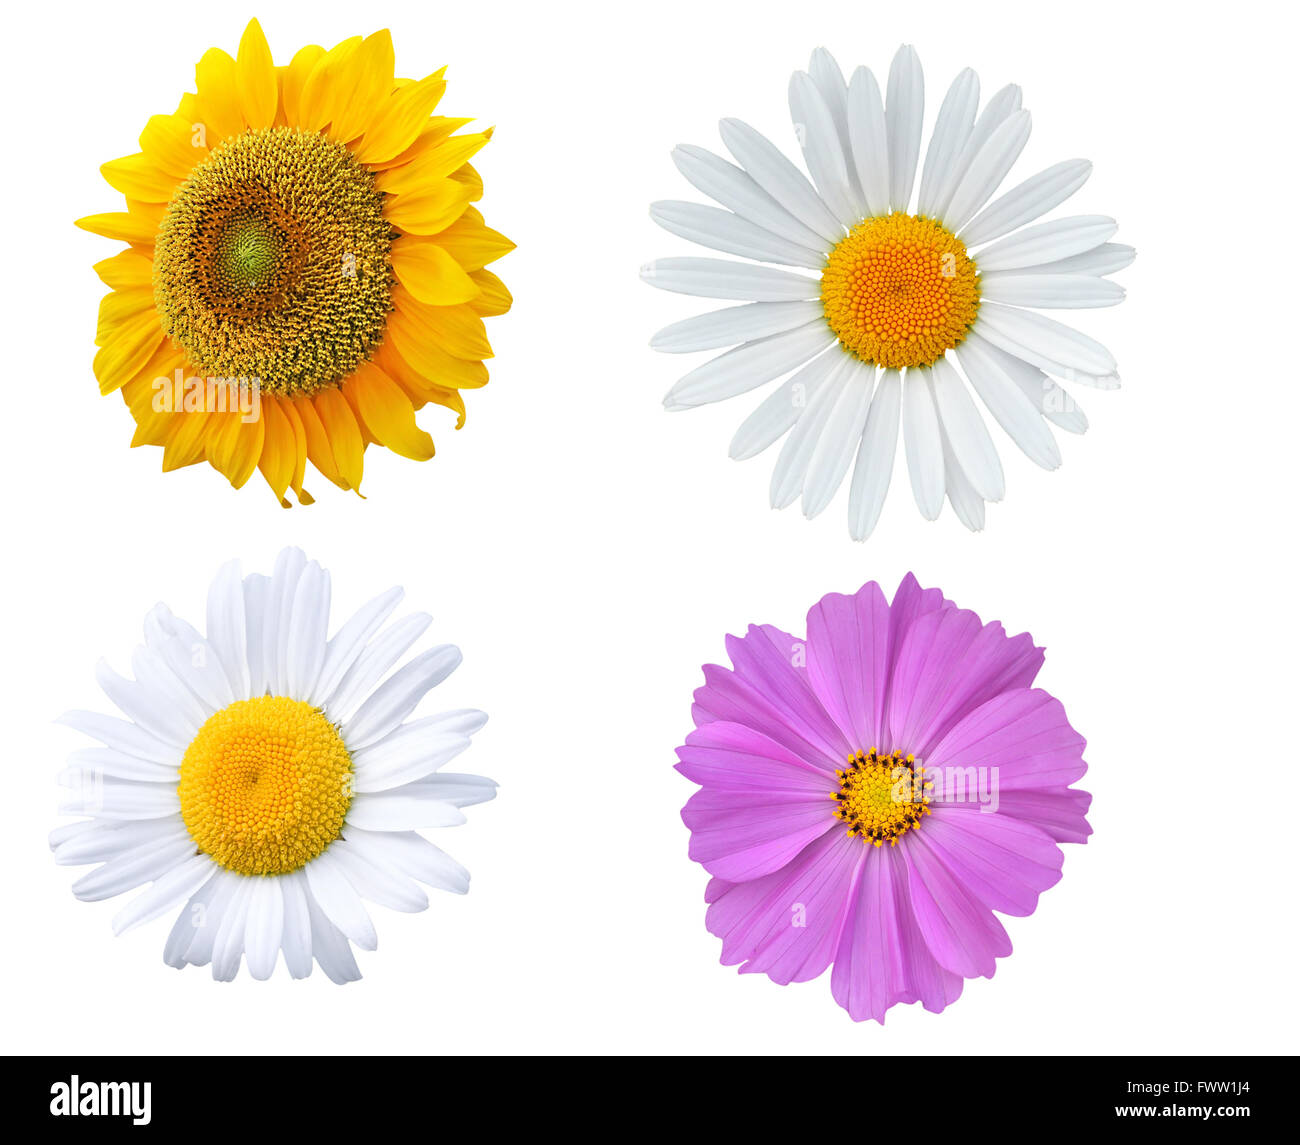 Sonnenblume, Gänseblümchen und lila Blüten, isoliert auf weiss Stockfoto